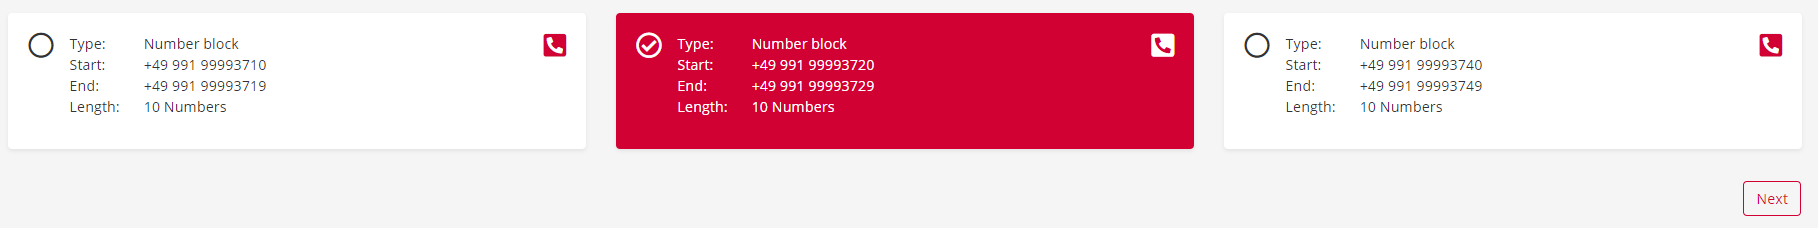 pascom cloud call number block